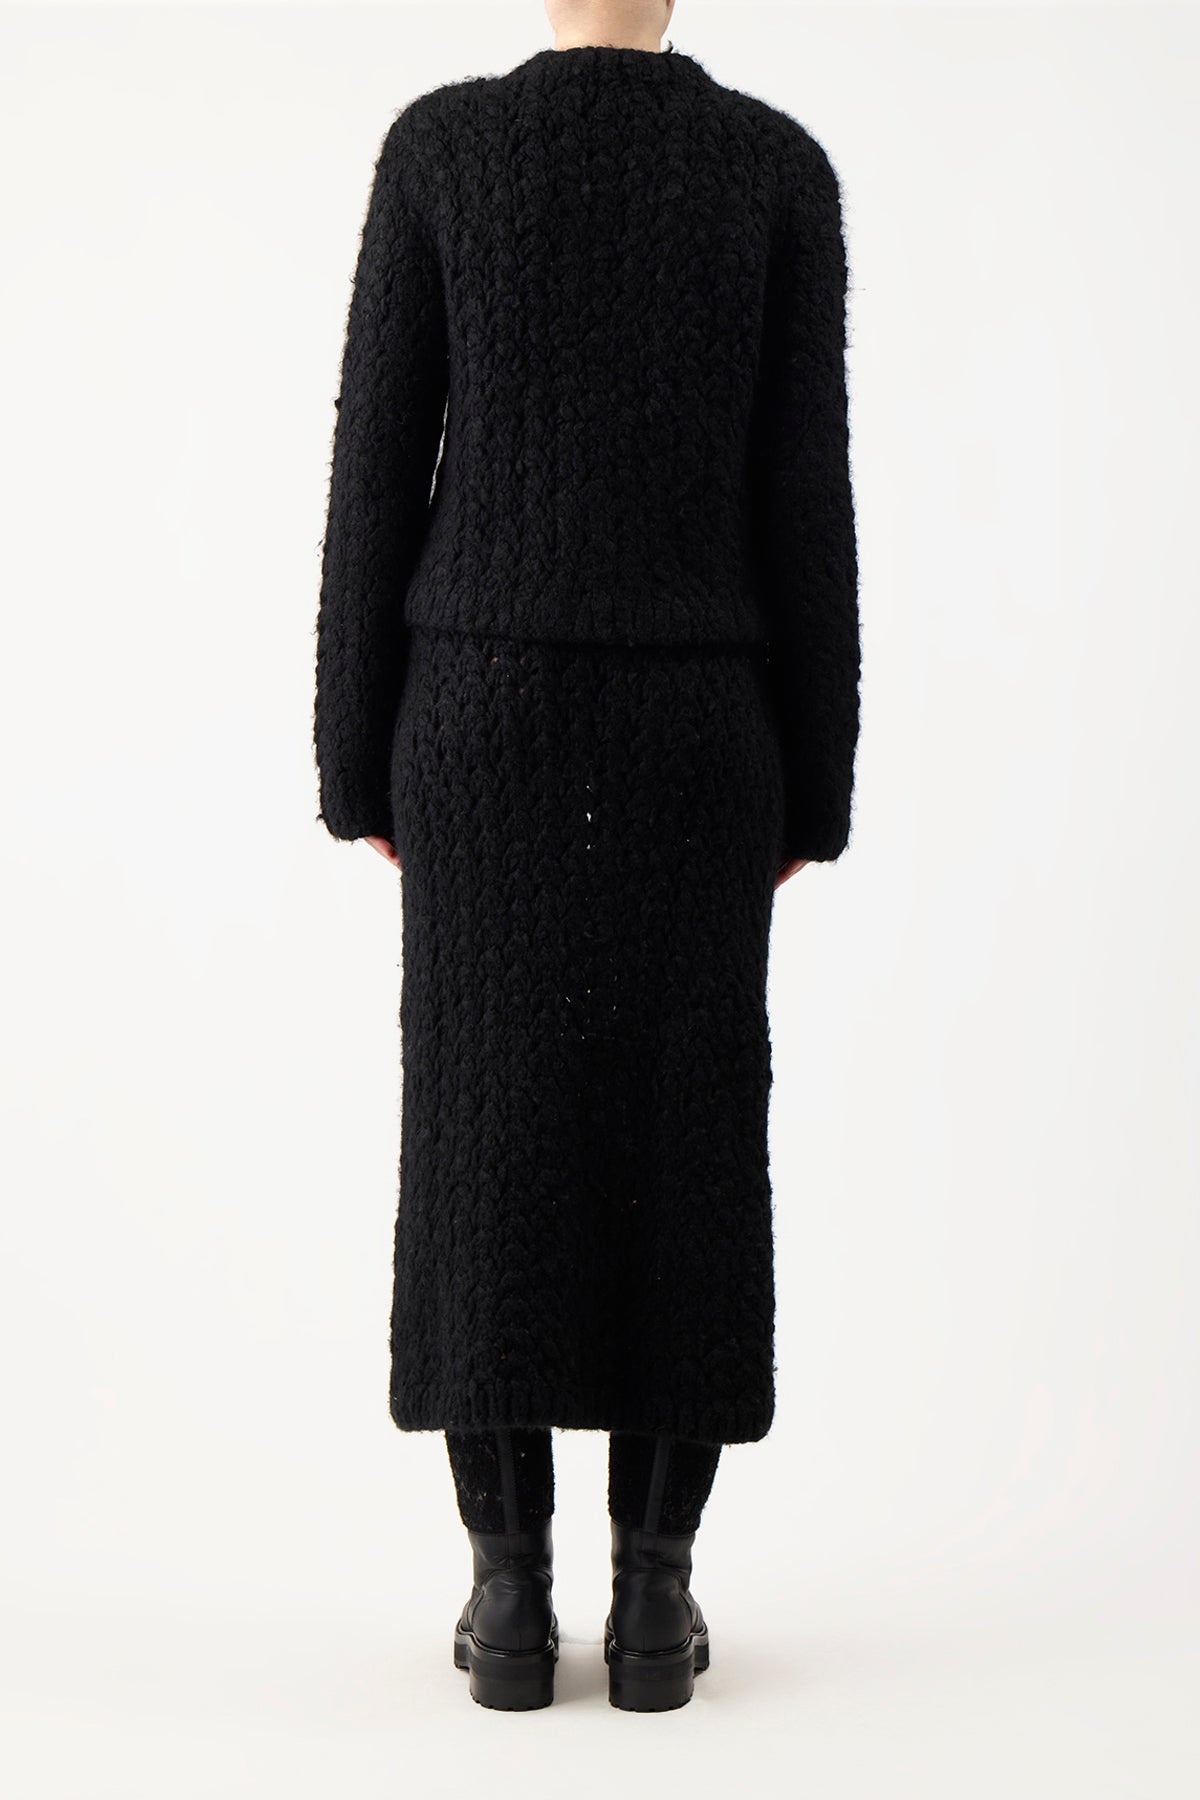 Collin Skirt in Black Welfat Cashmere - 4